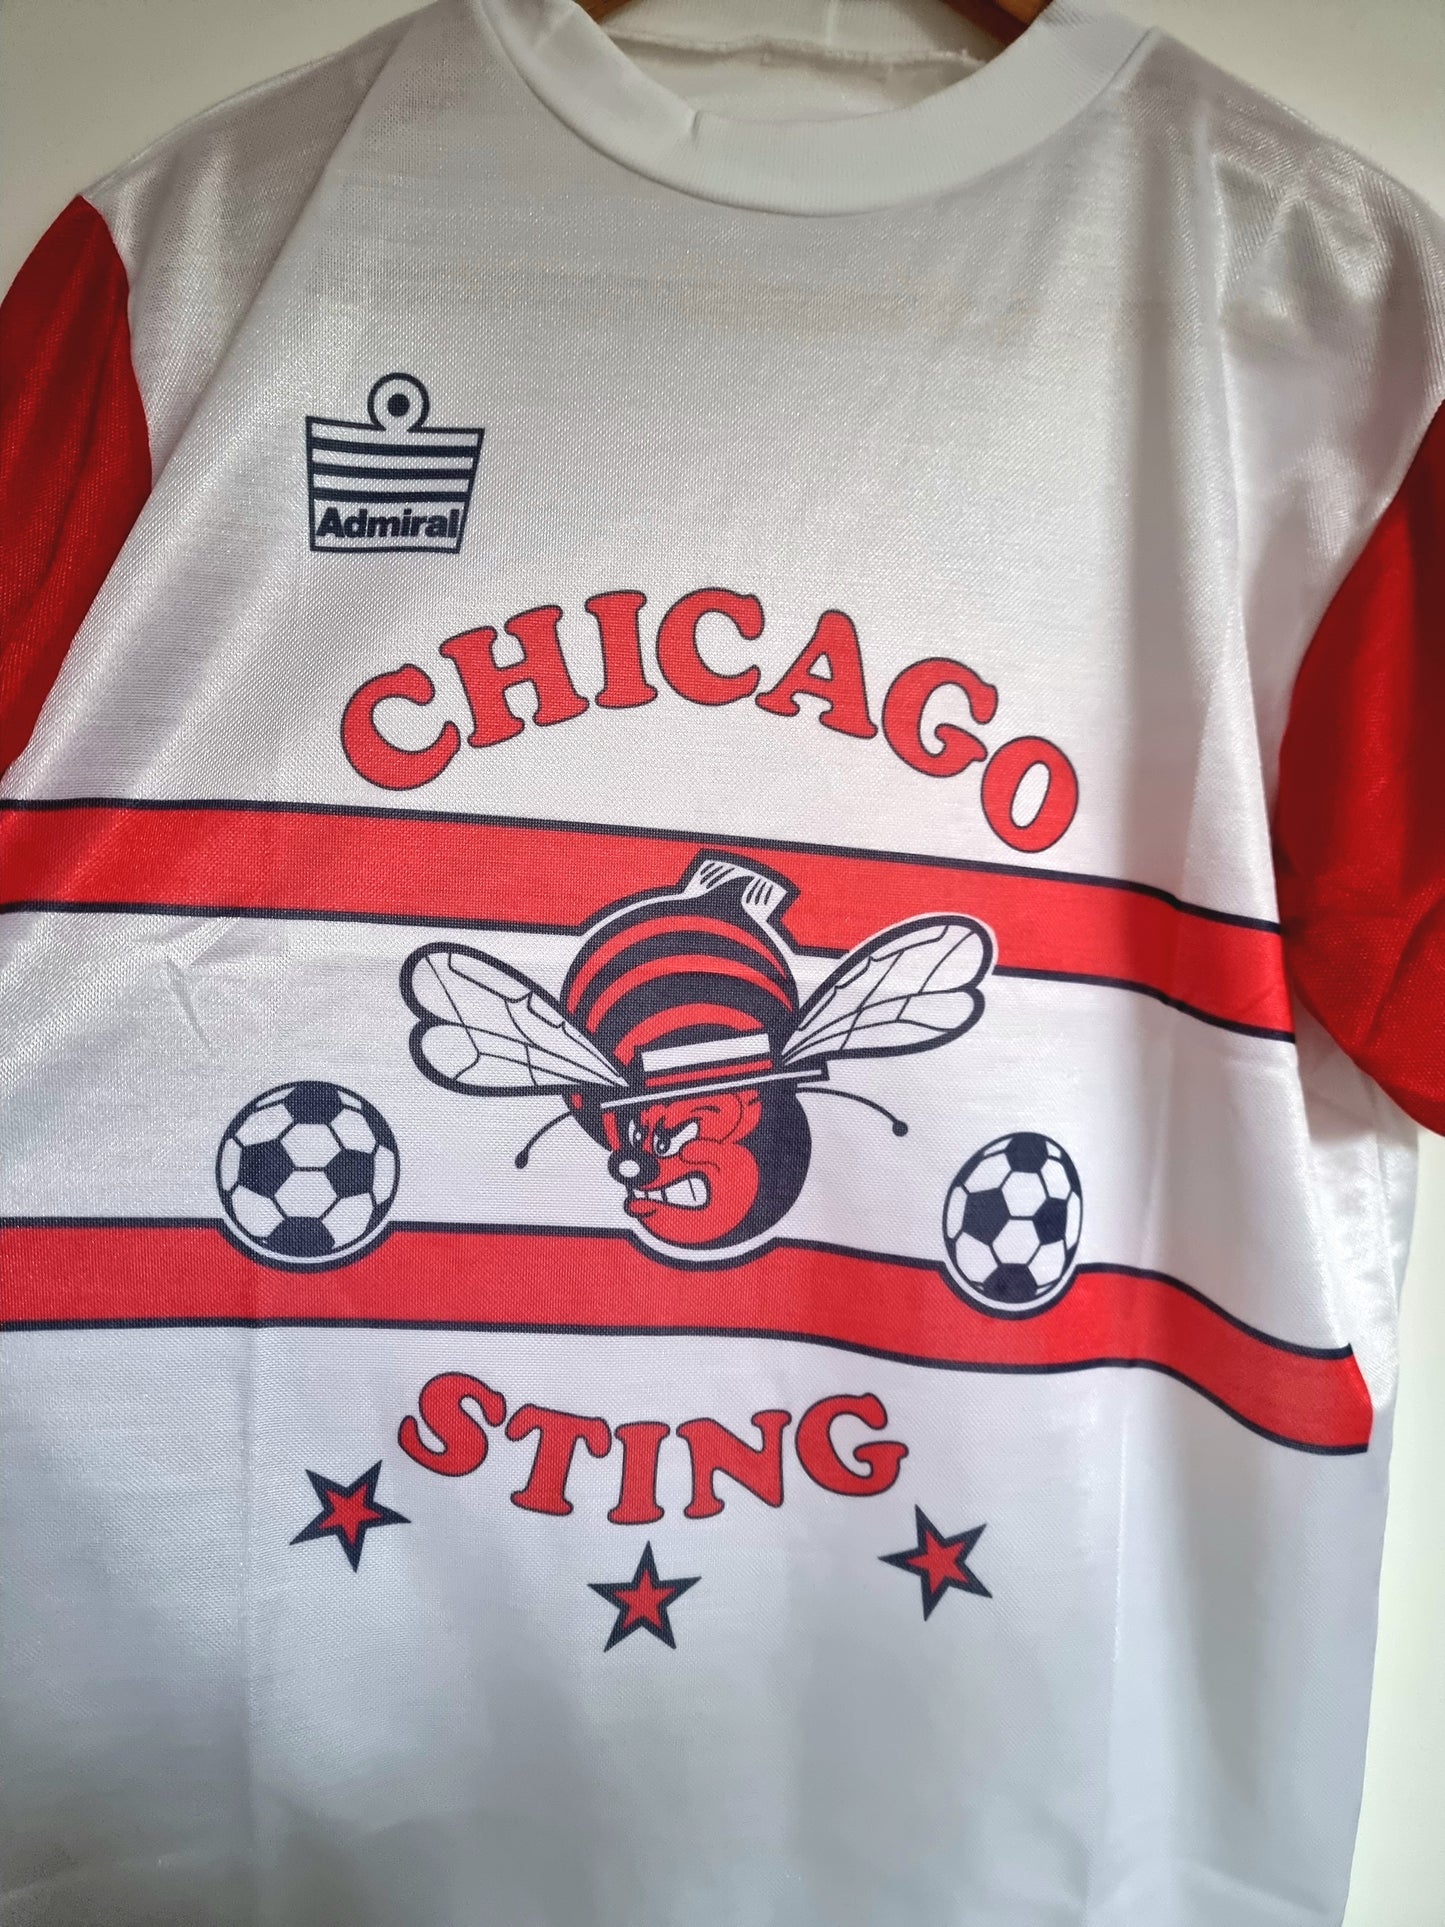 Admiral Chicago Sting 80s Leisure T- Shirt Medium